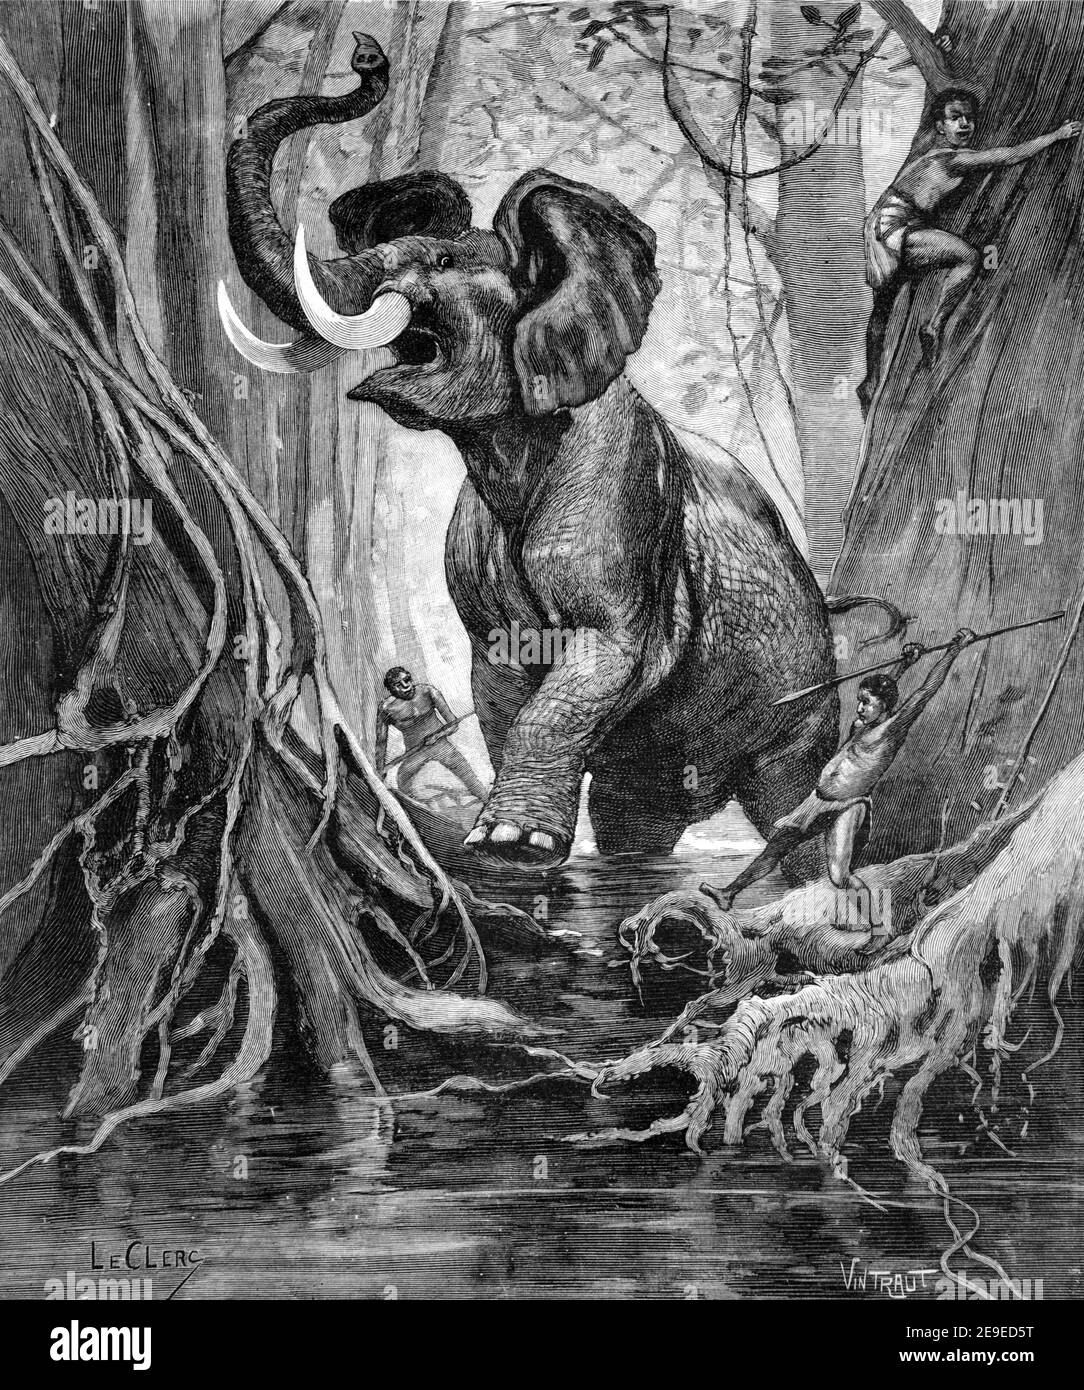 Afrikanische Pygmäen Jagd Afrikanischer Waldelefant, Loxodonta cyclotis, im Kongo 1898 Vintage Illustration oder Gravur Stockfoto